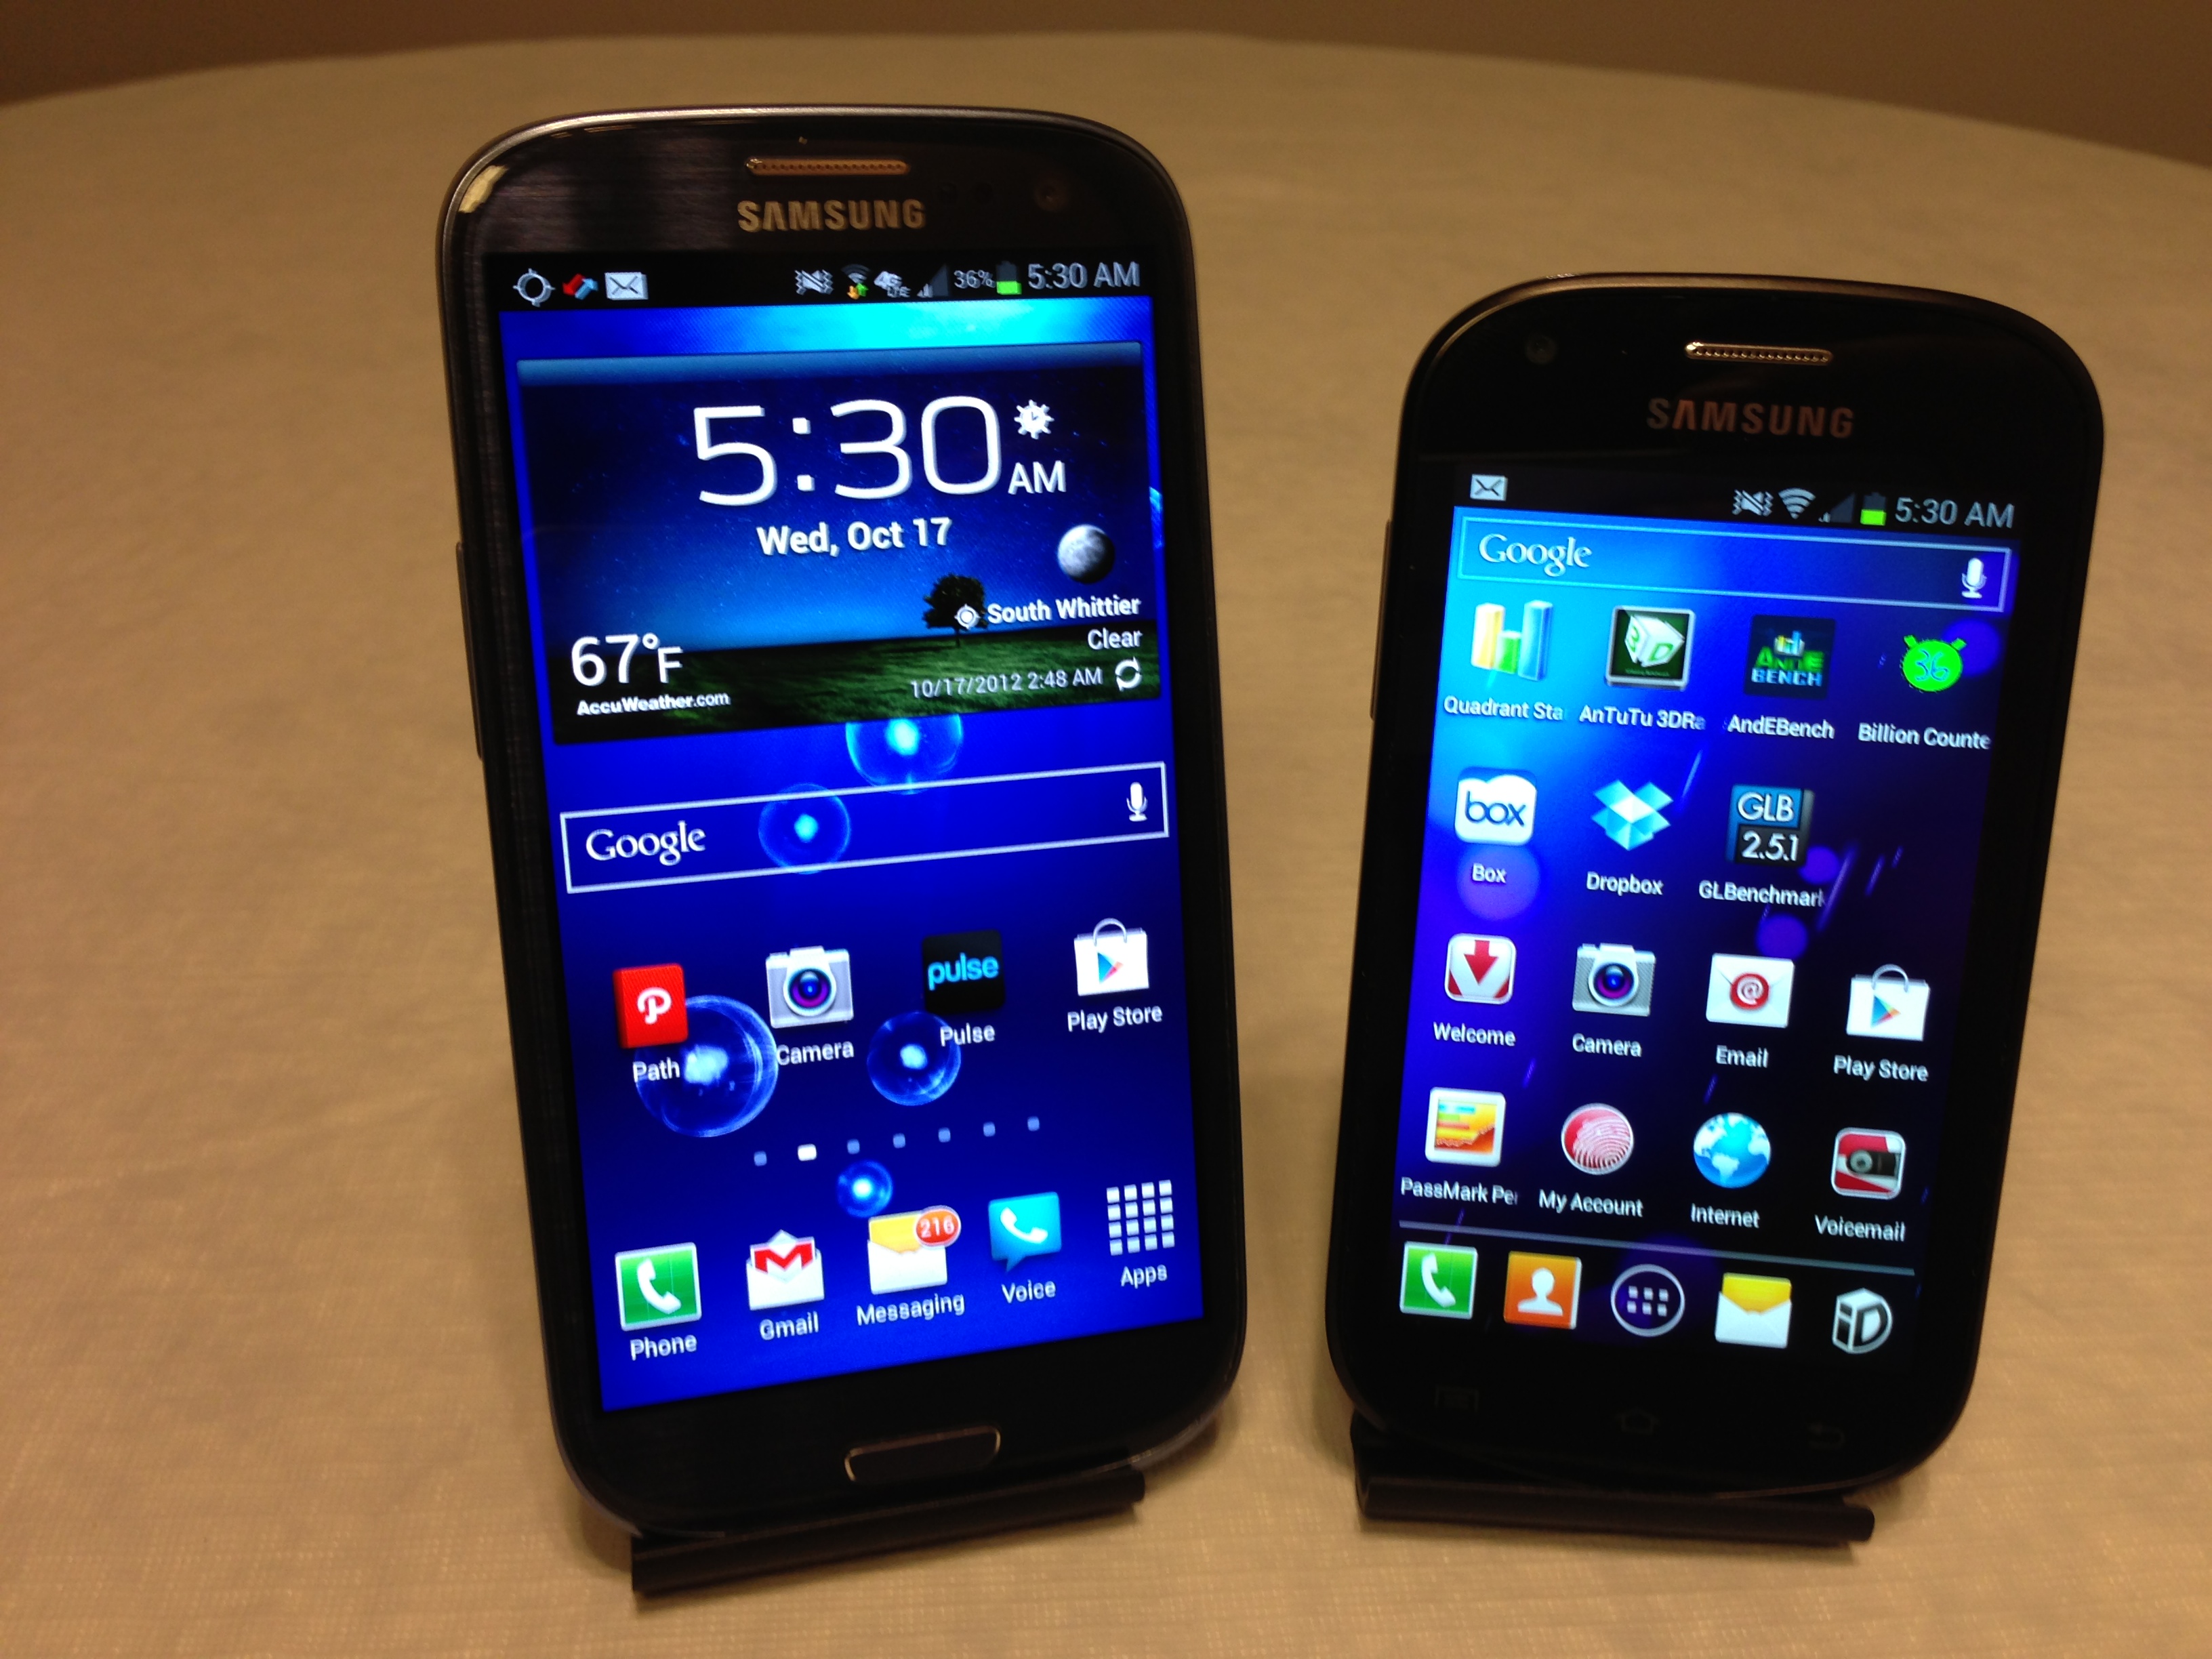 Samsung Intercept (Virgin Mobile) review: Samsung Intercept